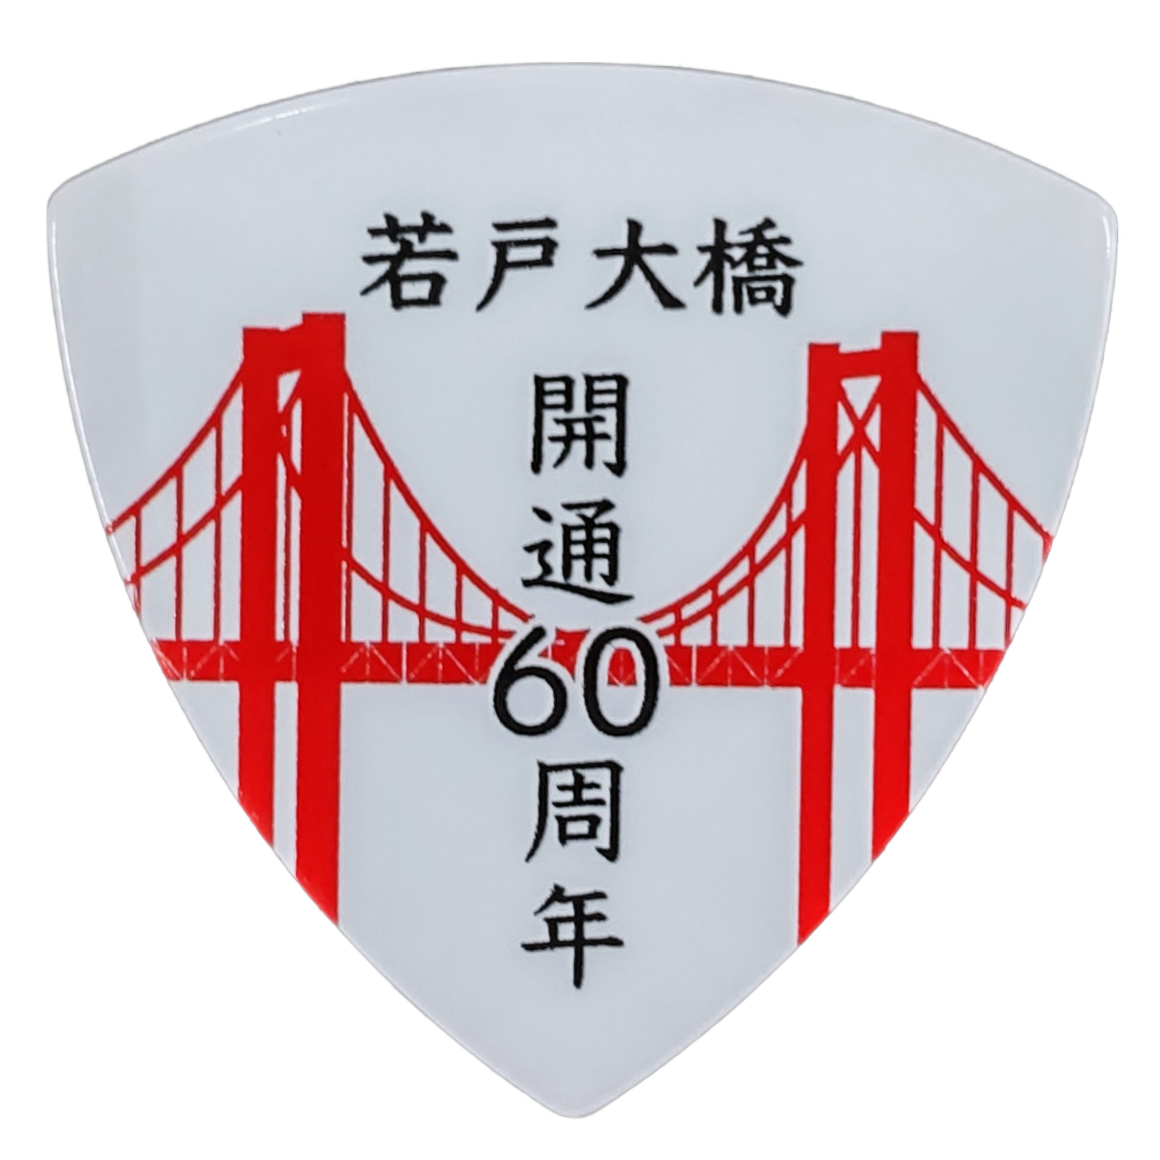 SHOP ORIGINAL 若戸大橋 開通60周年記念 ギターピック 1.0mm×5枚